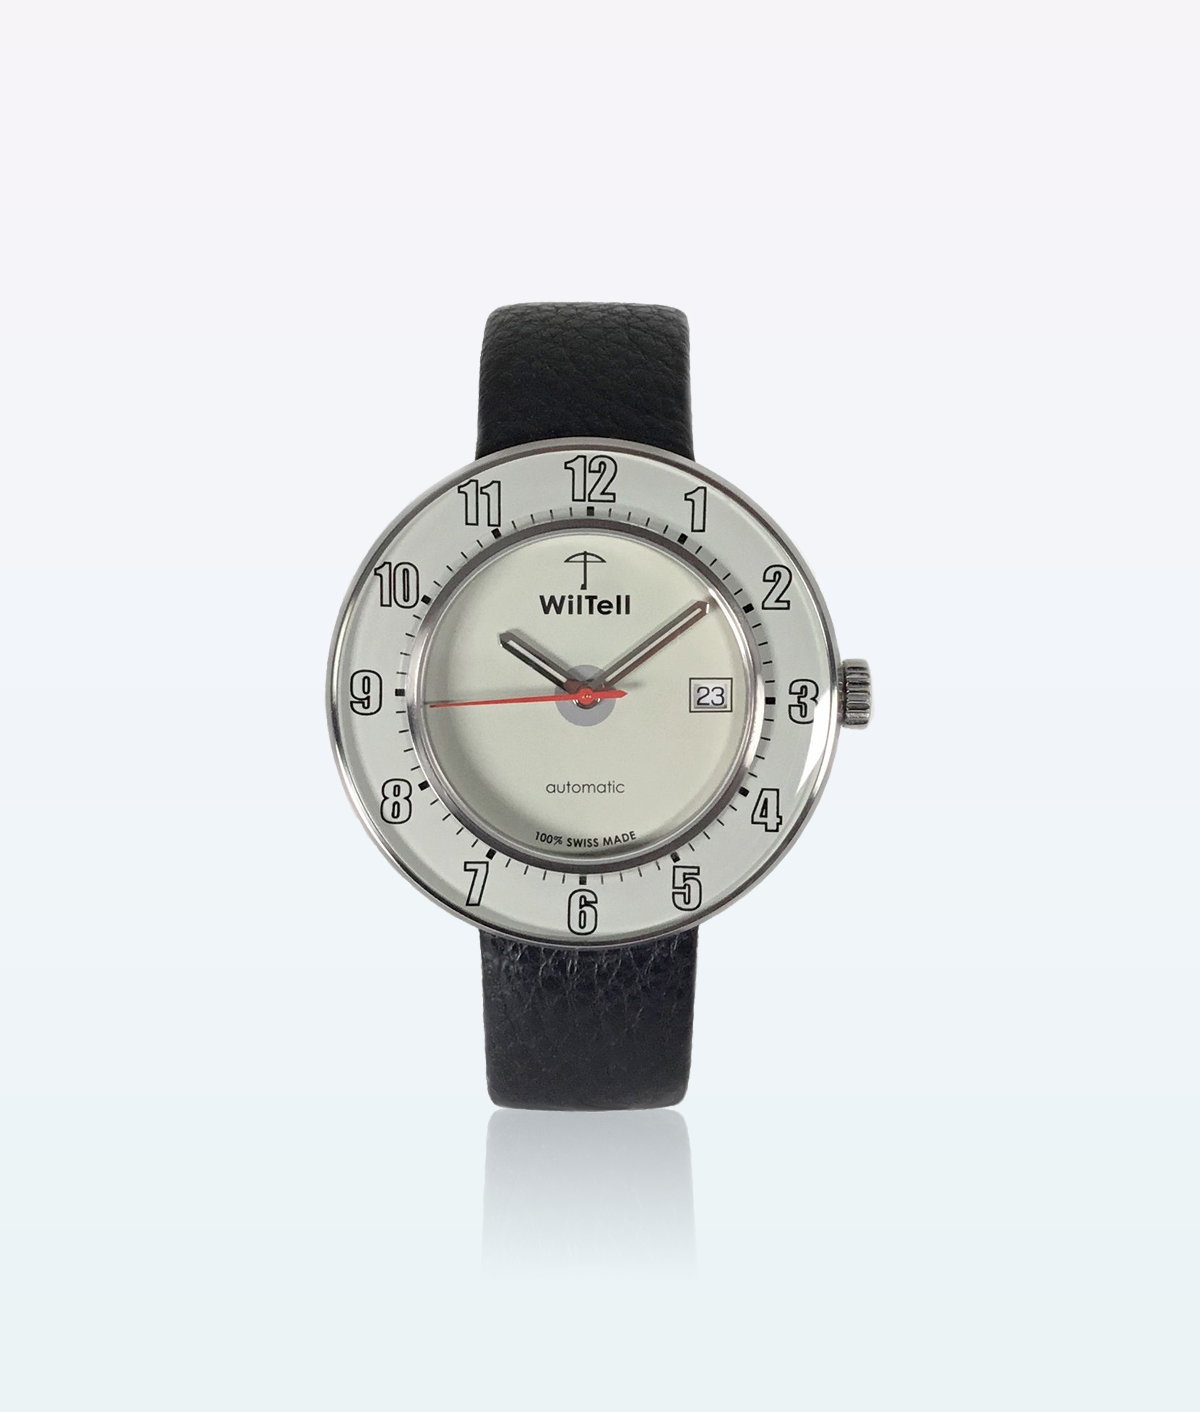 Montre-bracelet suisse WilTell 100 blanche